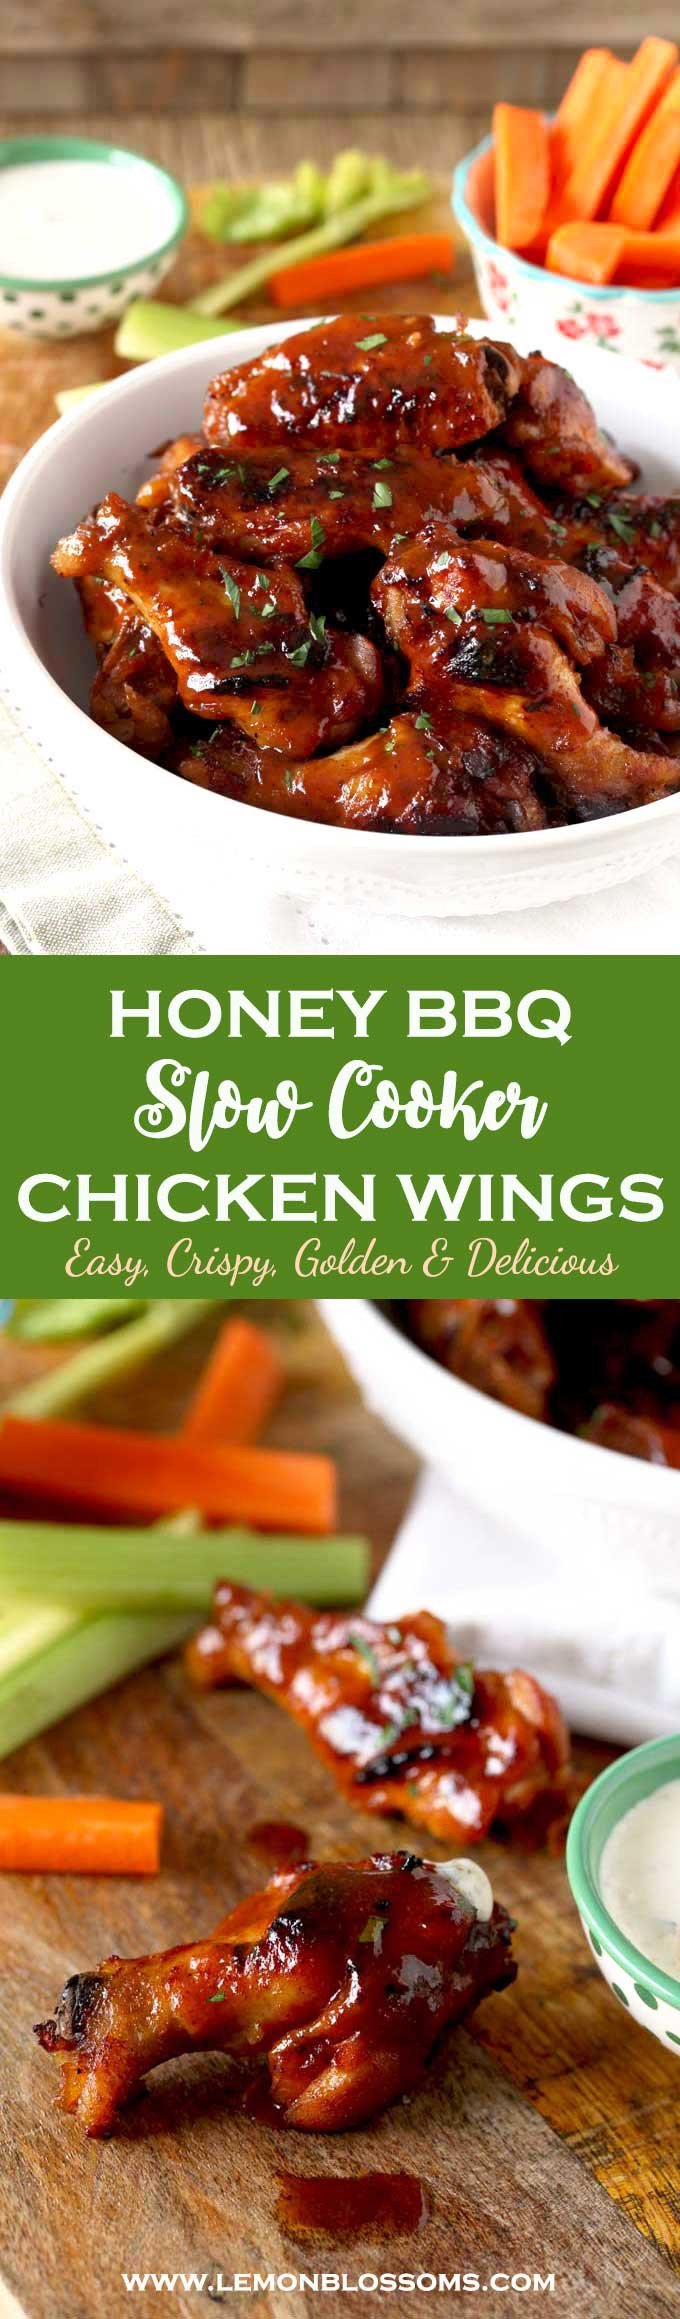 Chicken Wings Slow Cooker Recipe
 Honey BBQ Slow Cooker Chicken Wings